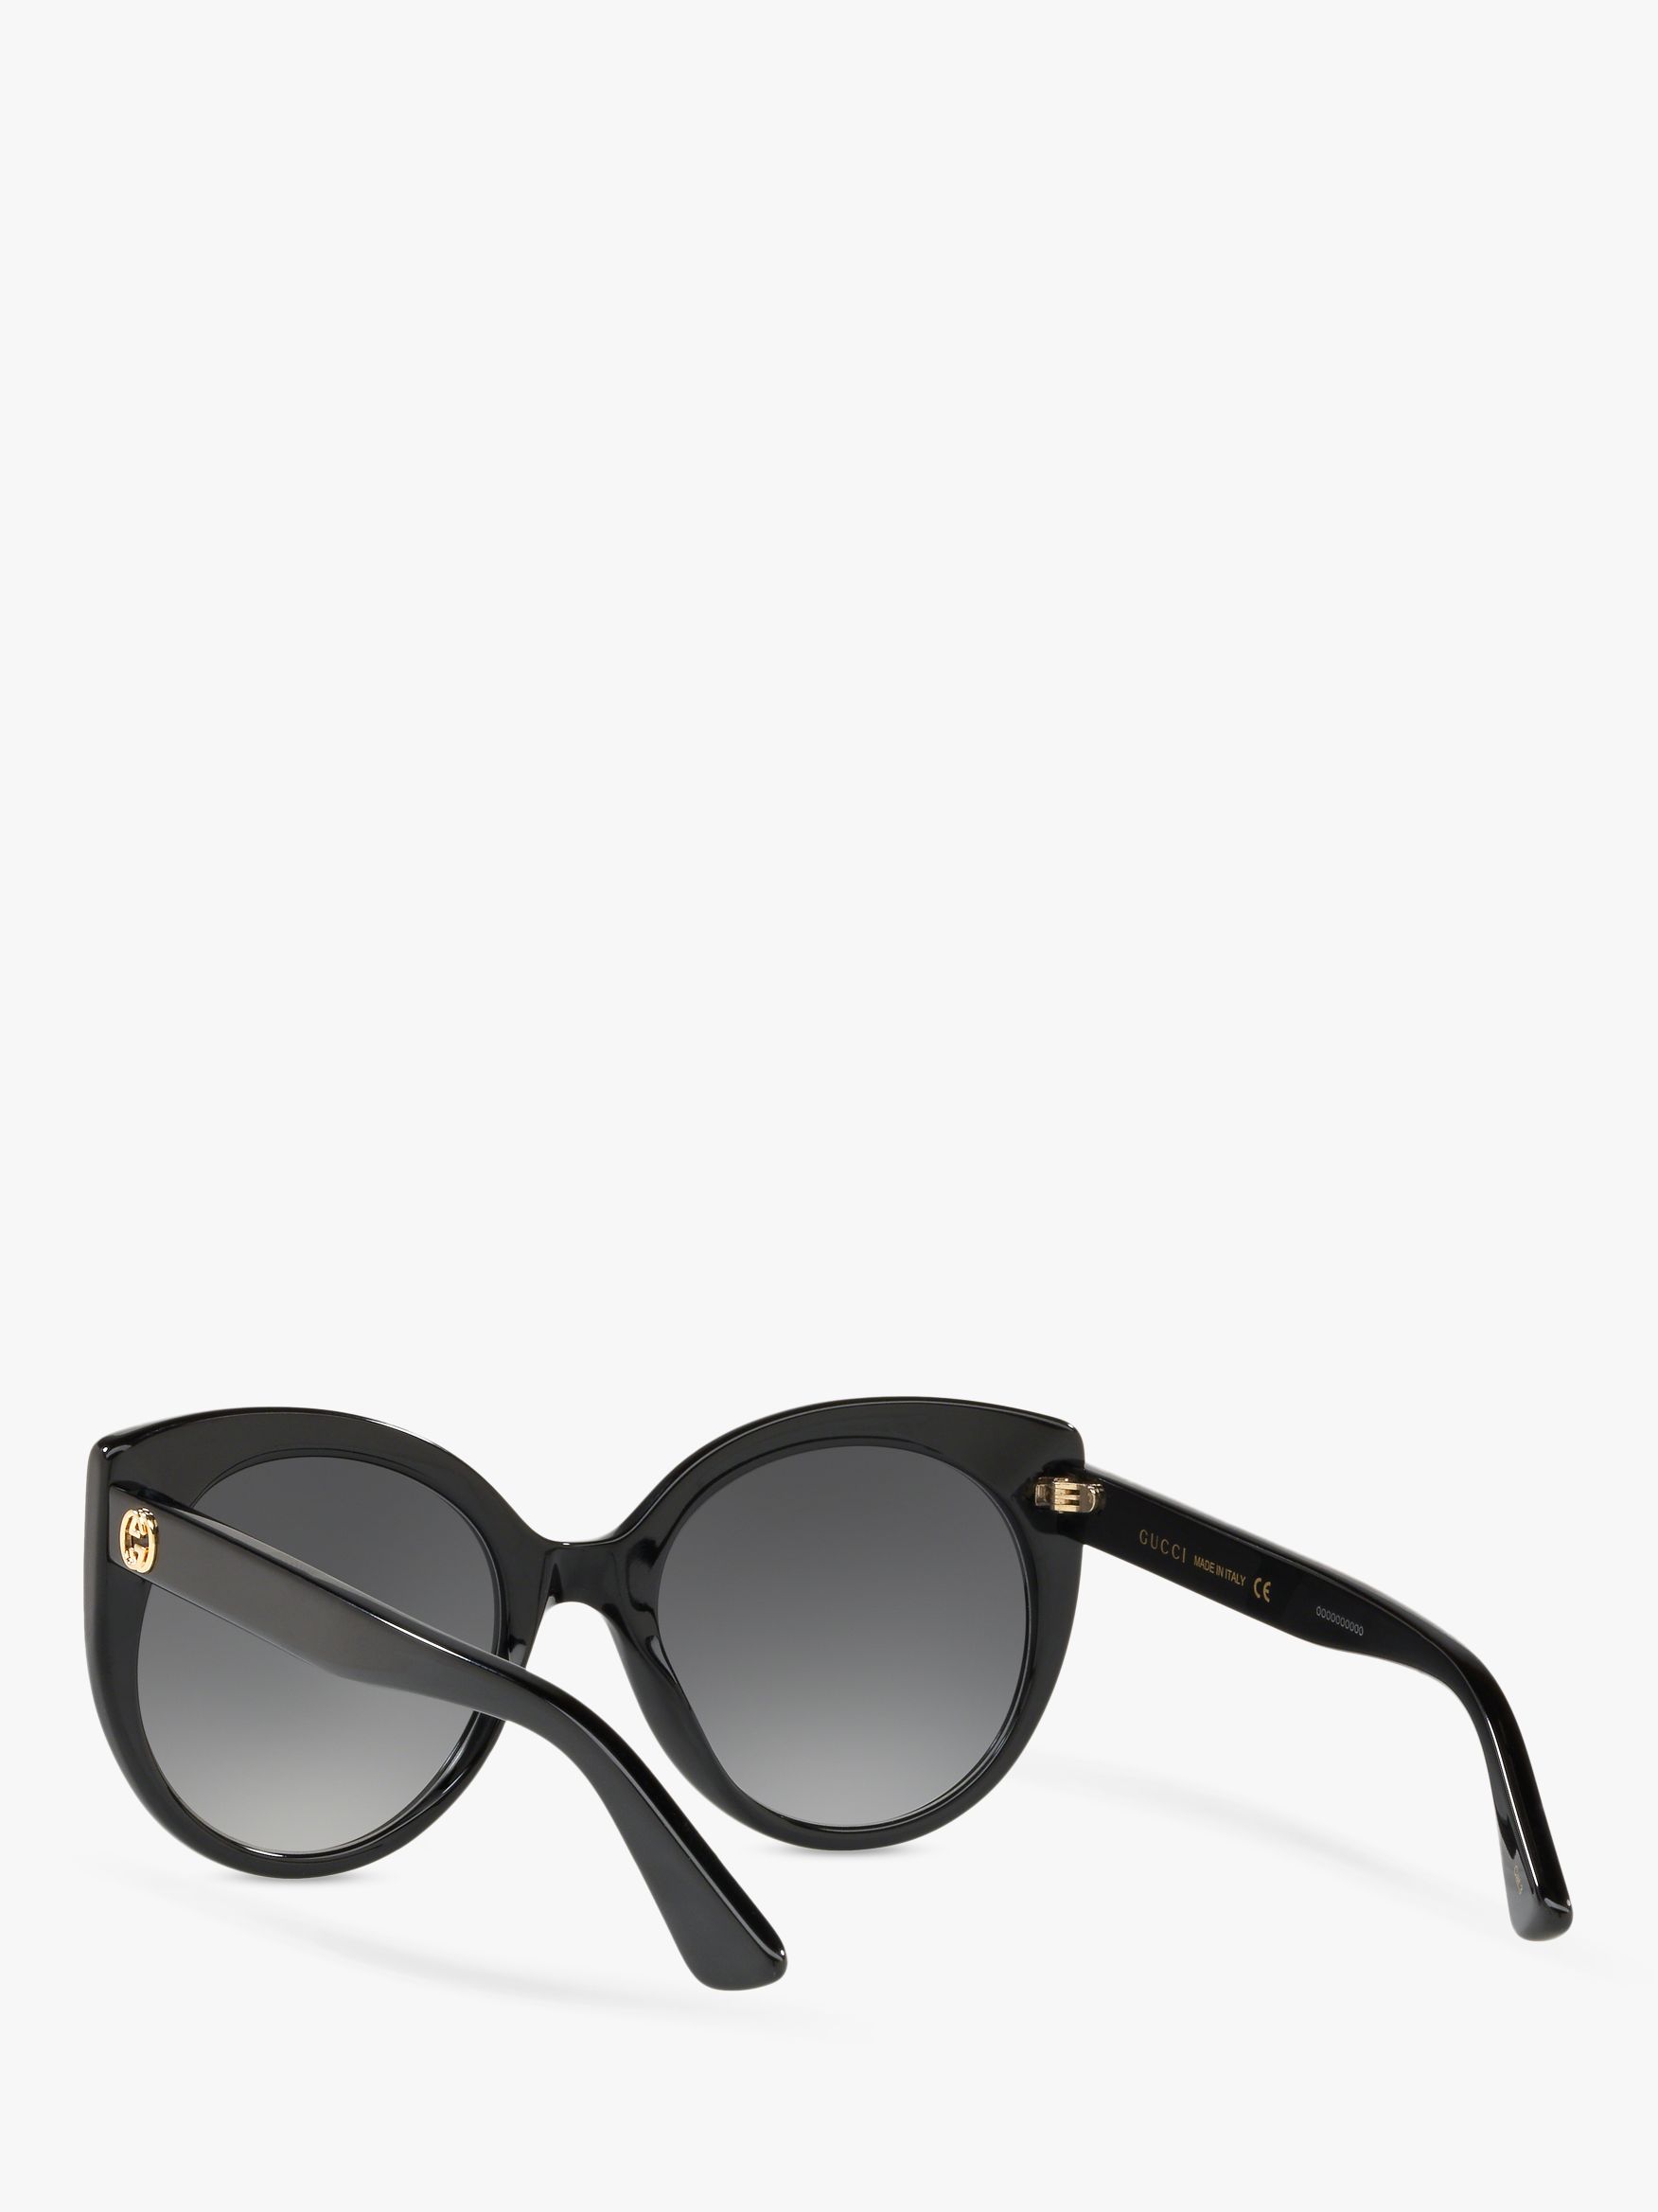 Gucci GG0325S Women's Cat's Eye Sunglasses